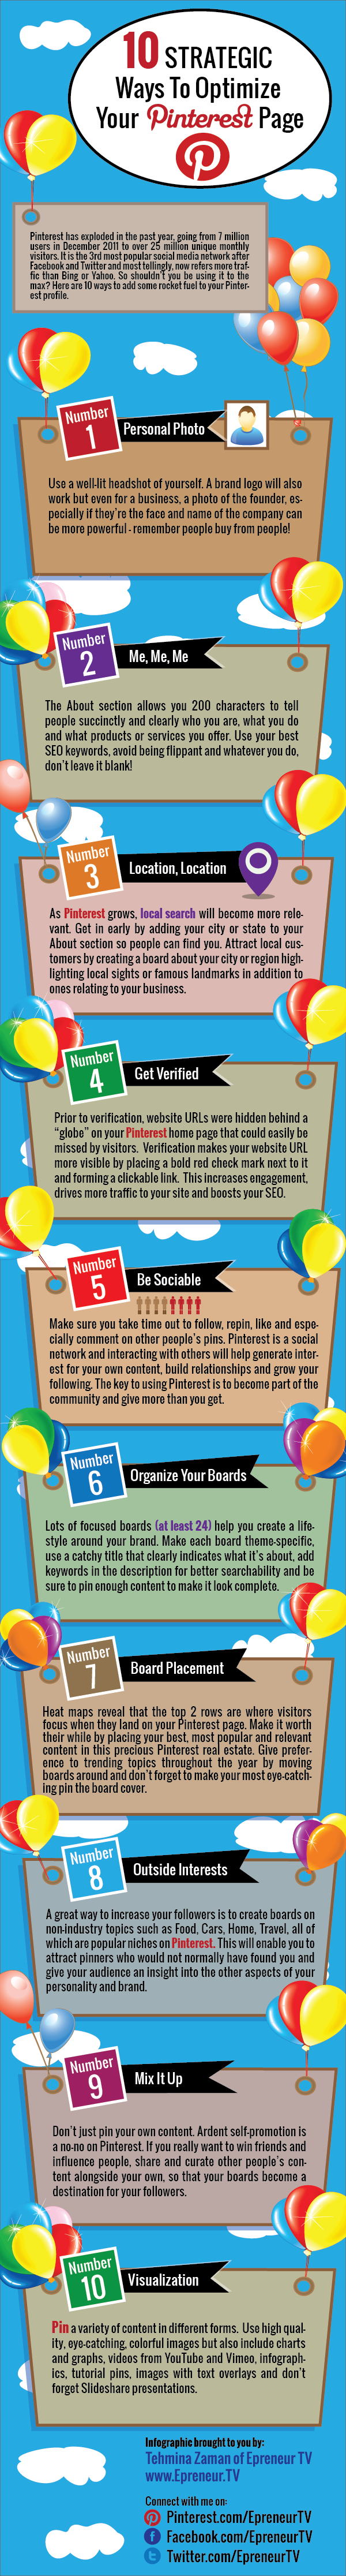 10 Ways To Optimize Your Pinterest Profile